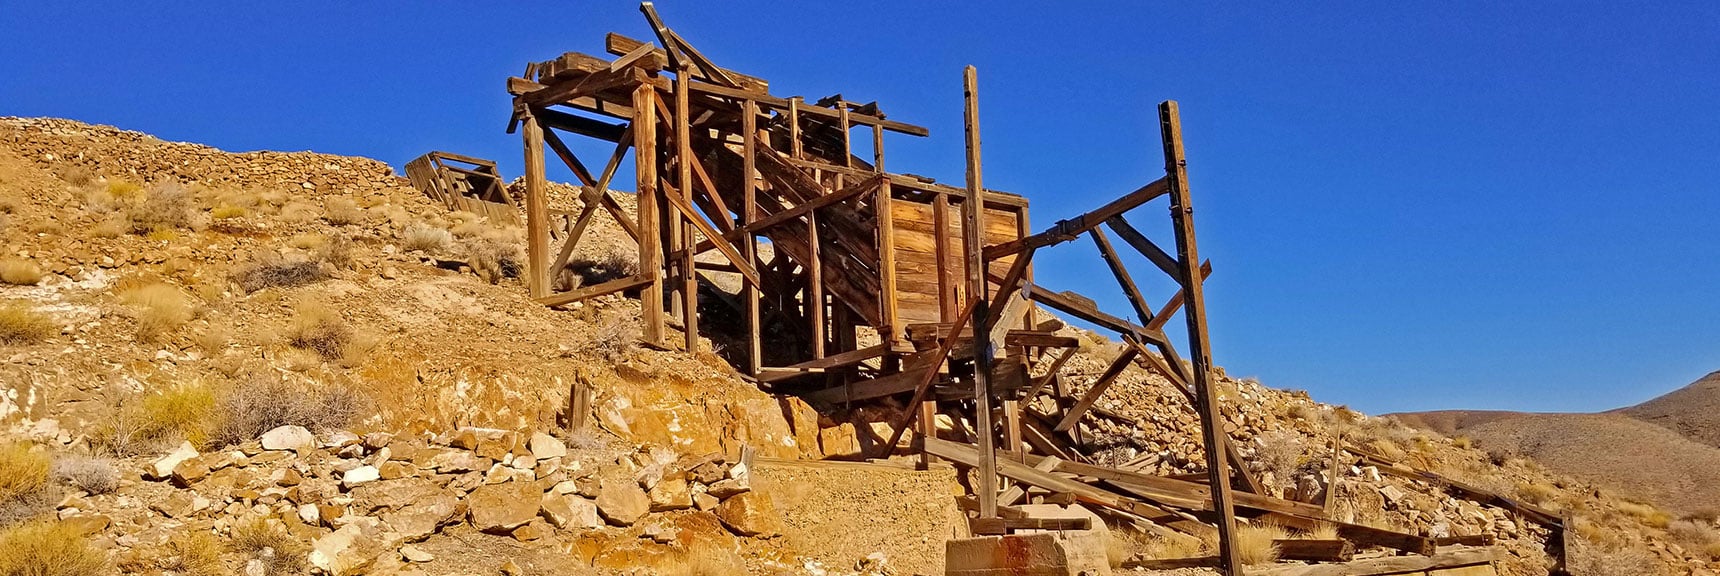 Bottom View of Cashier Mill | Eureka Mine, Harrisburg, Cashier Mill, Death Valley, California